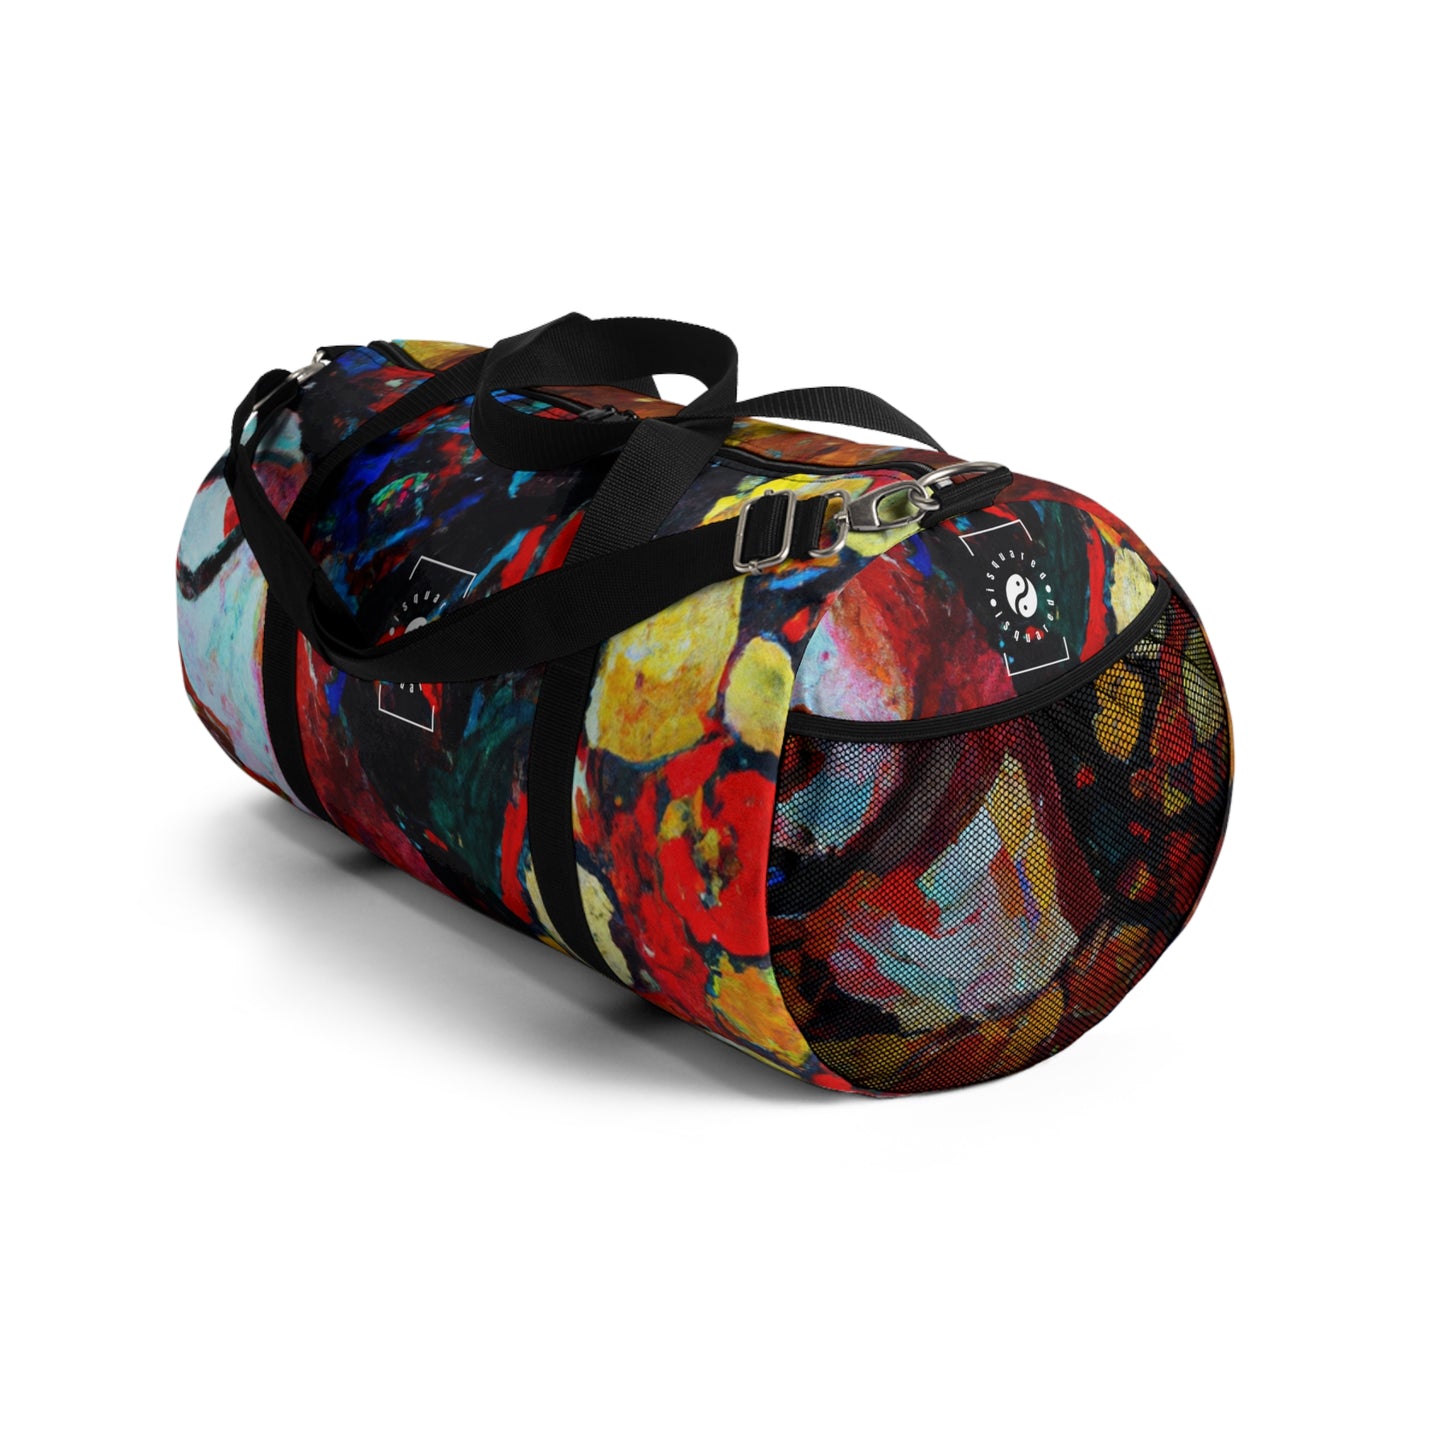 Galileo Foscari - Duffle Bag